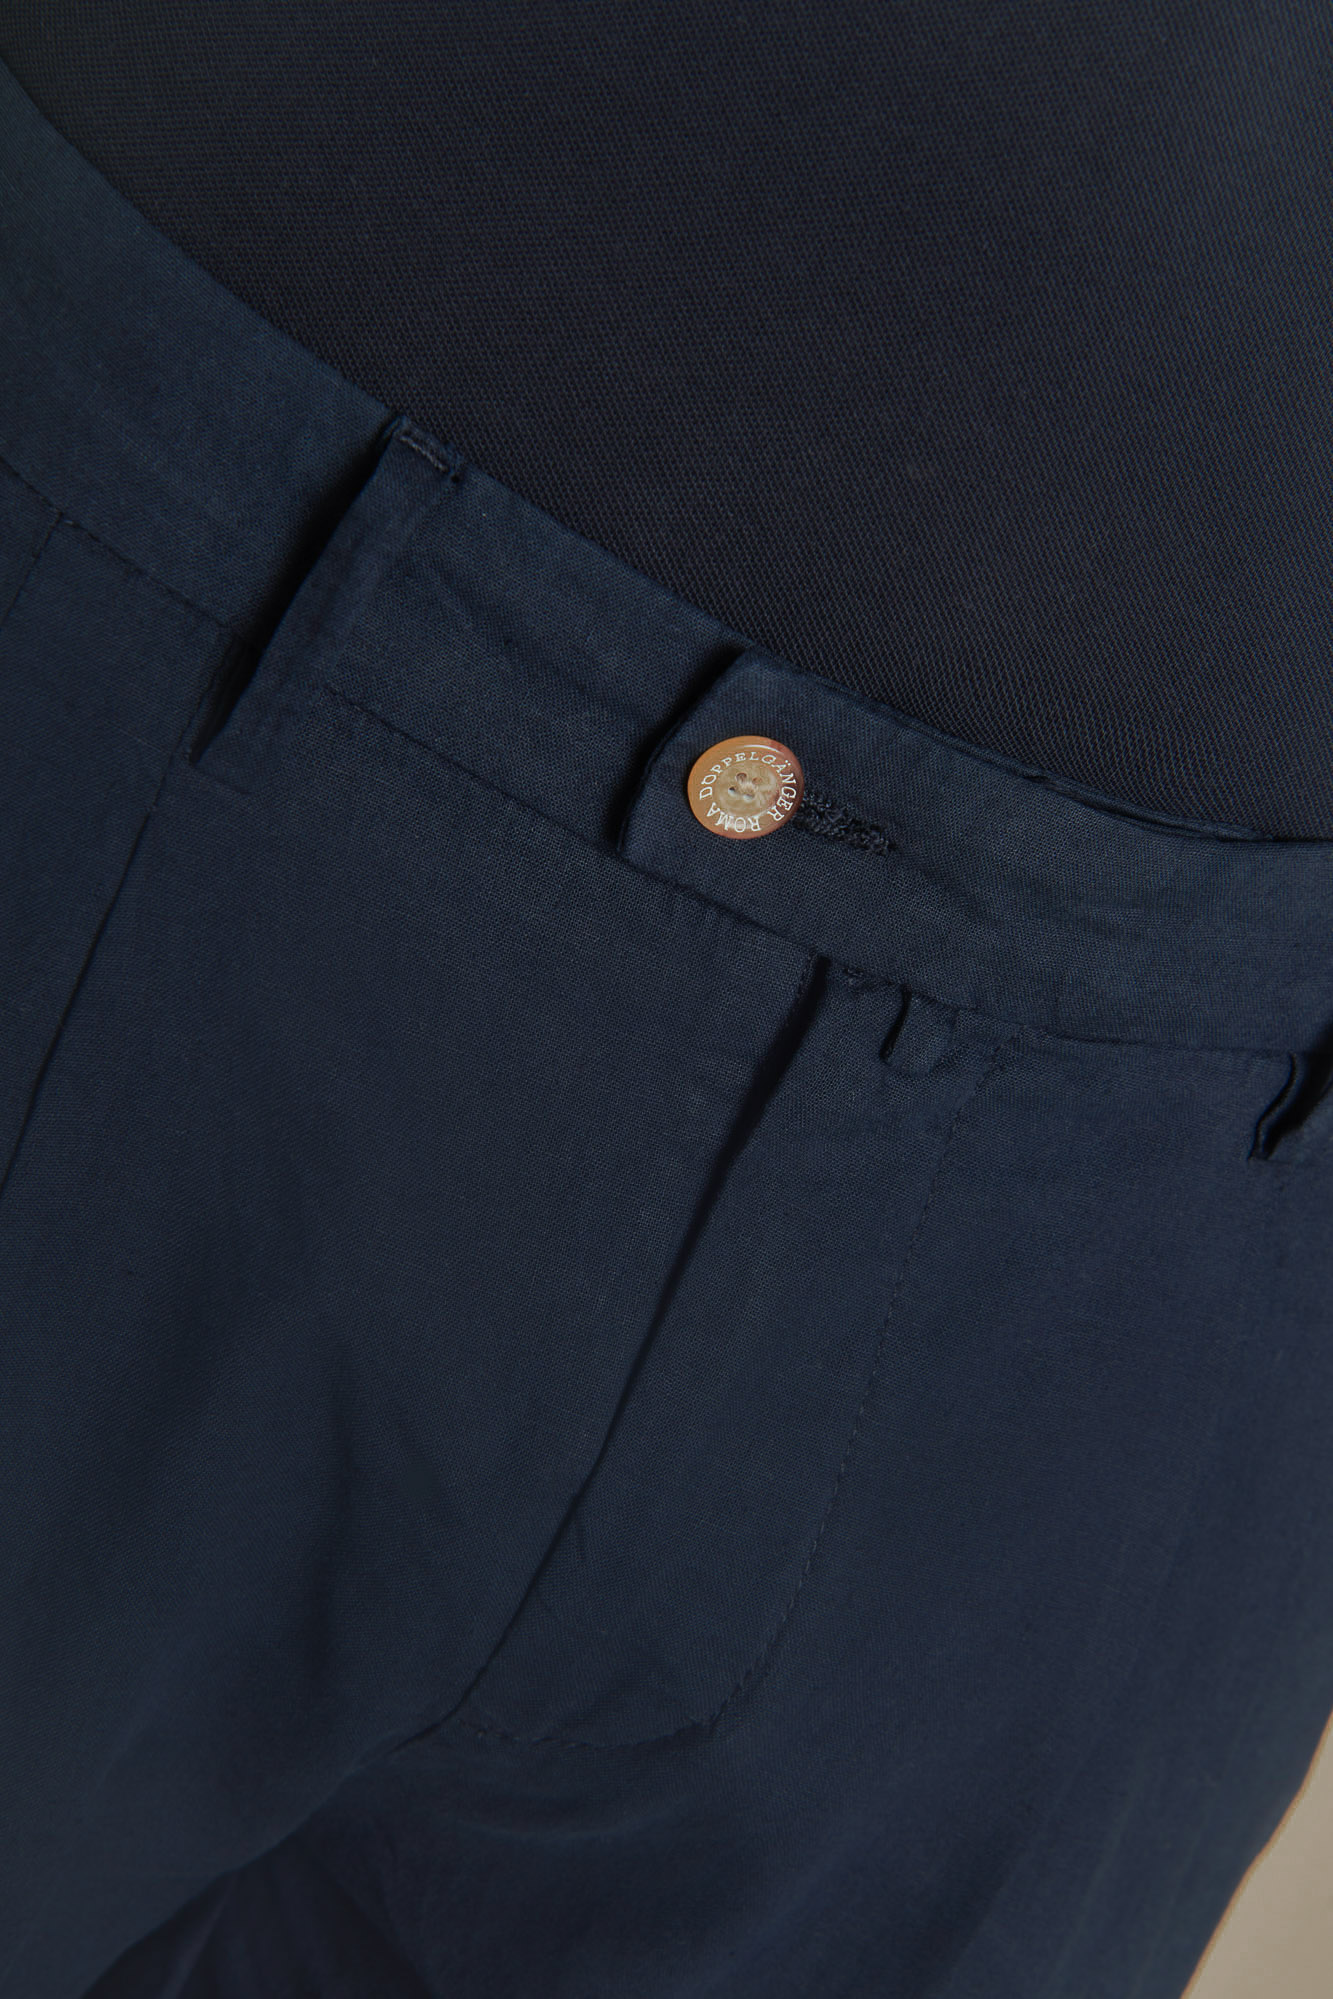 Pantalone uomo chino misto lino con doppia pinces image number null